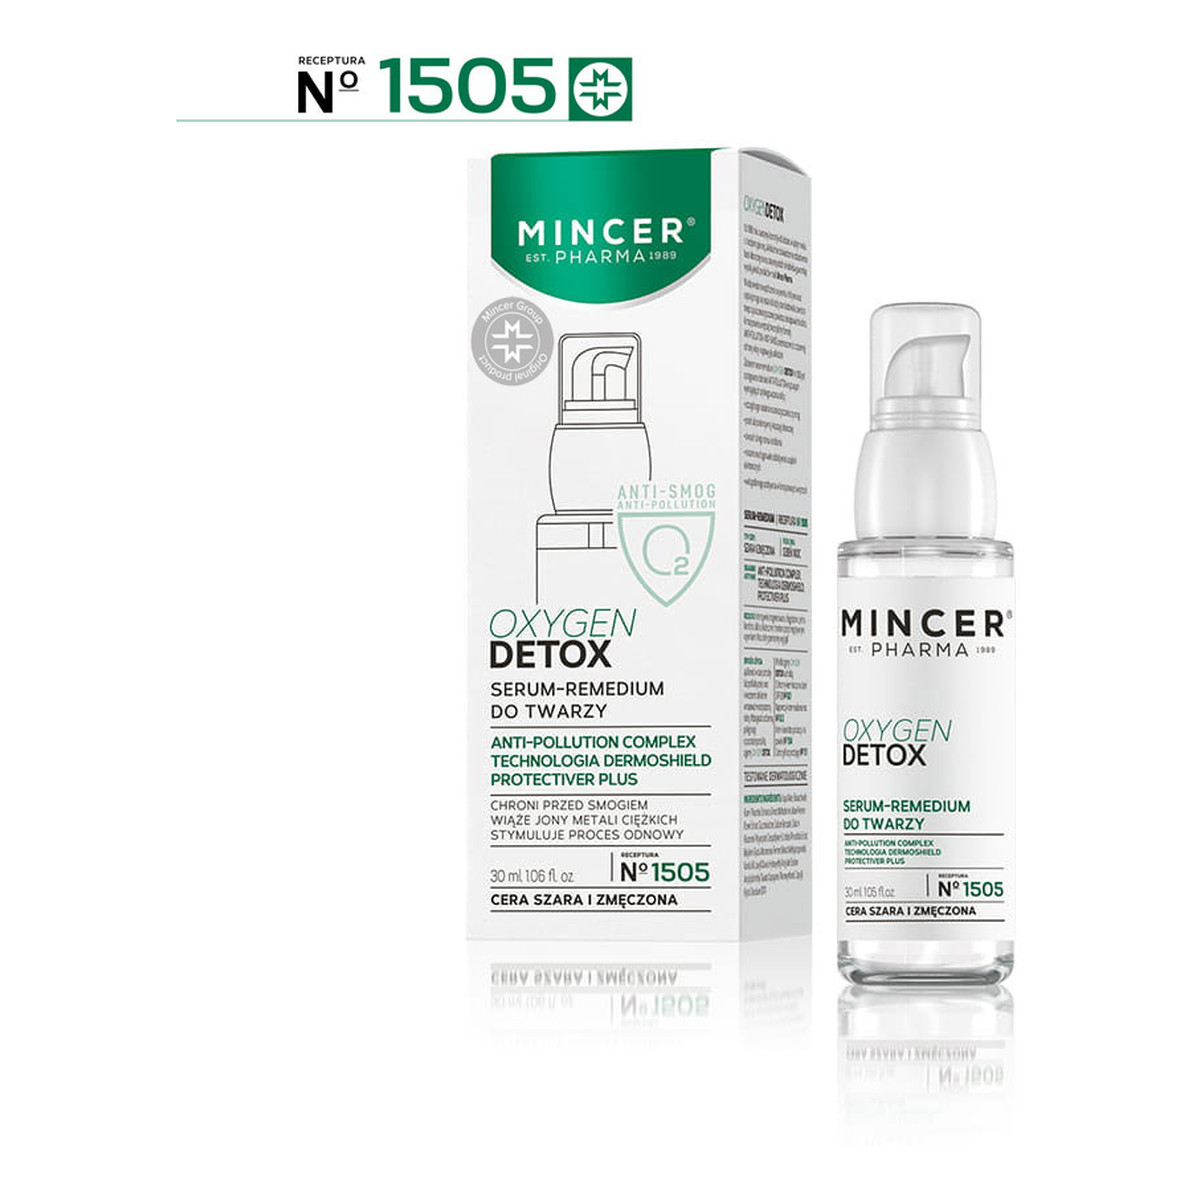 Mincer Pharma Oxygen Detox Serum-remedium anti-radical do twarzy No 1505 30ml